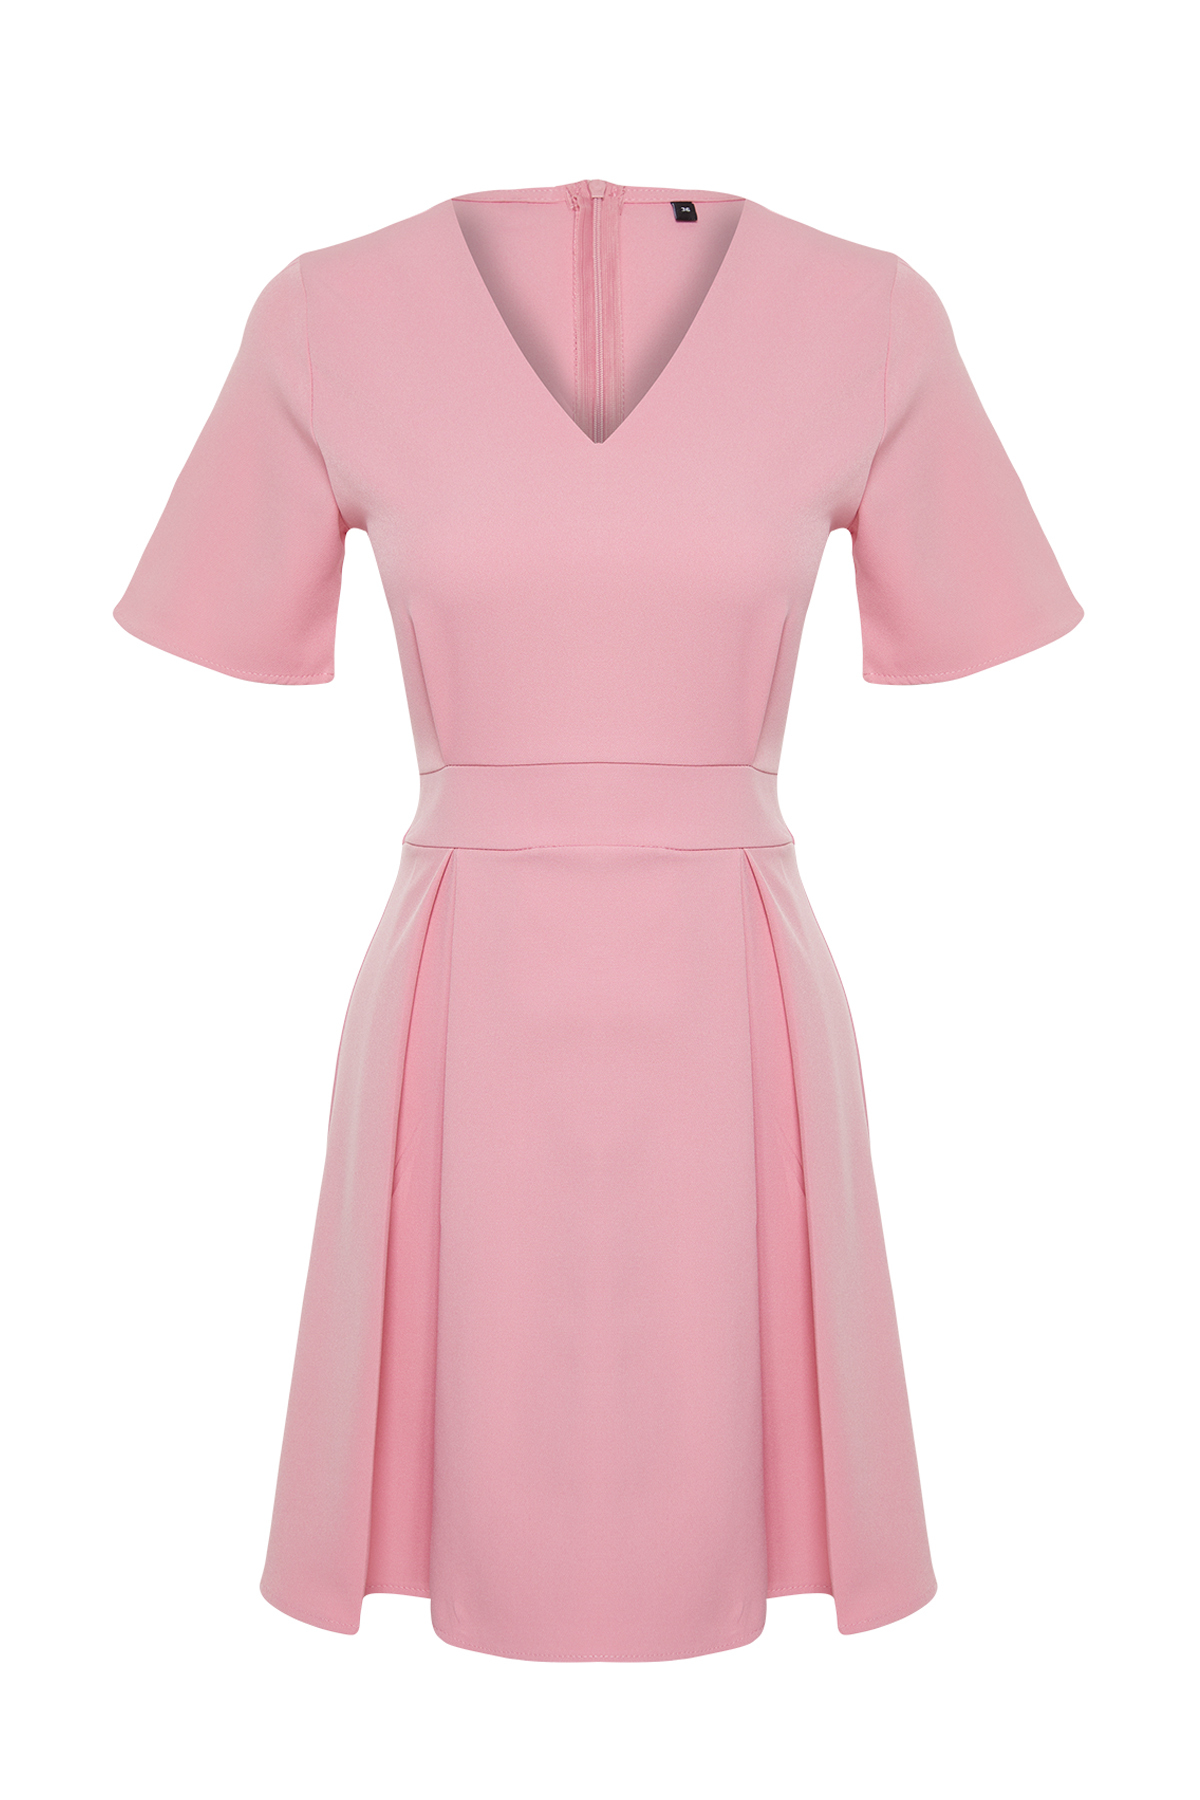 Trendyol Pink Belted Waist Open Mini Woven Short Sleeve Dress